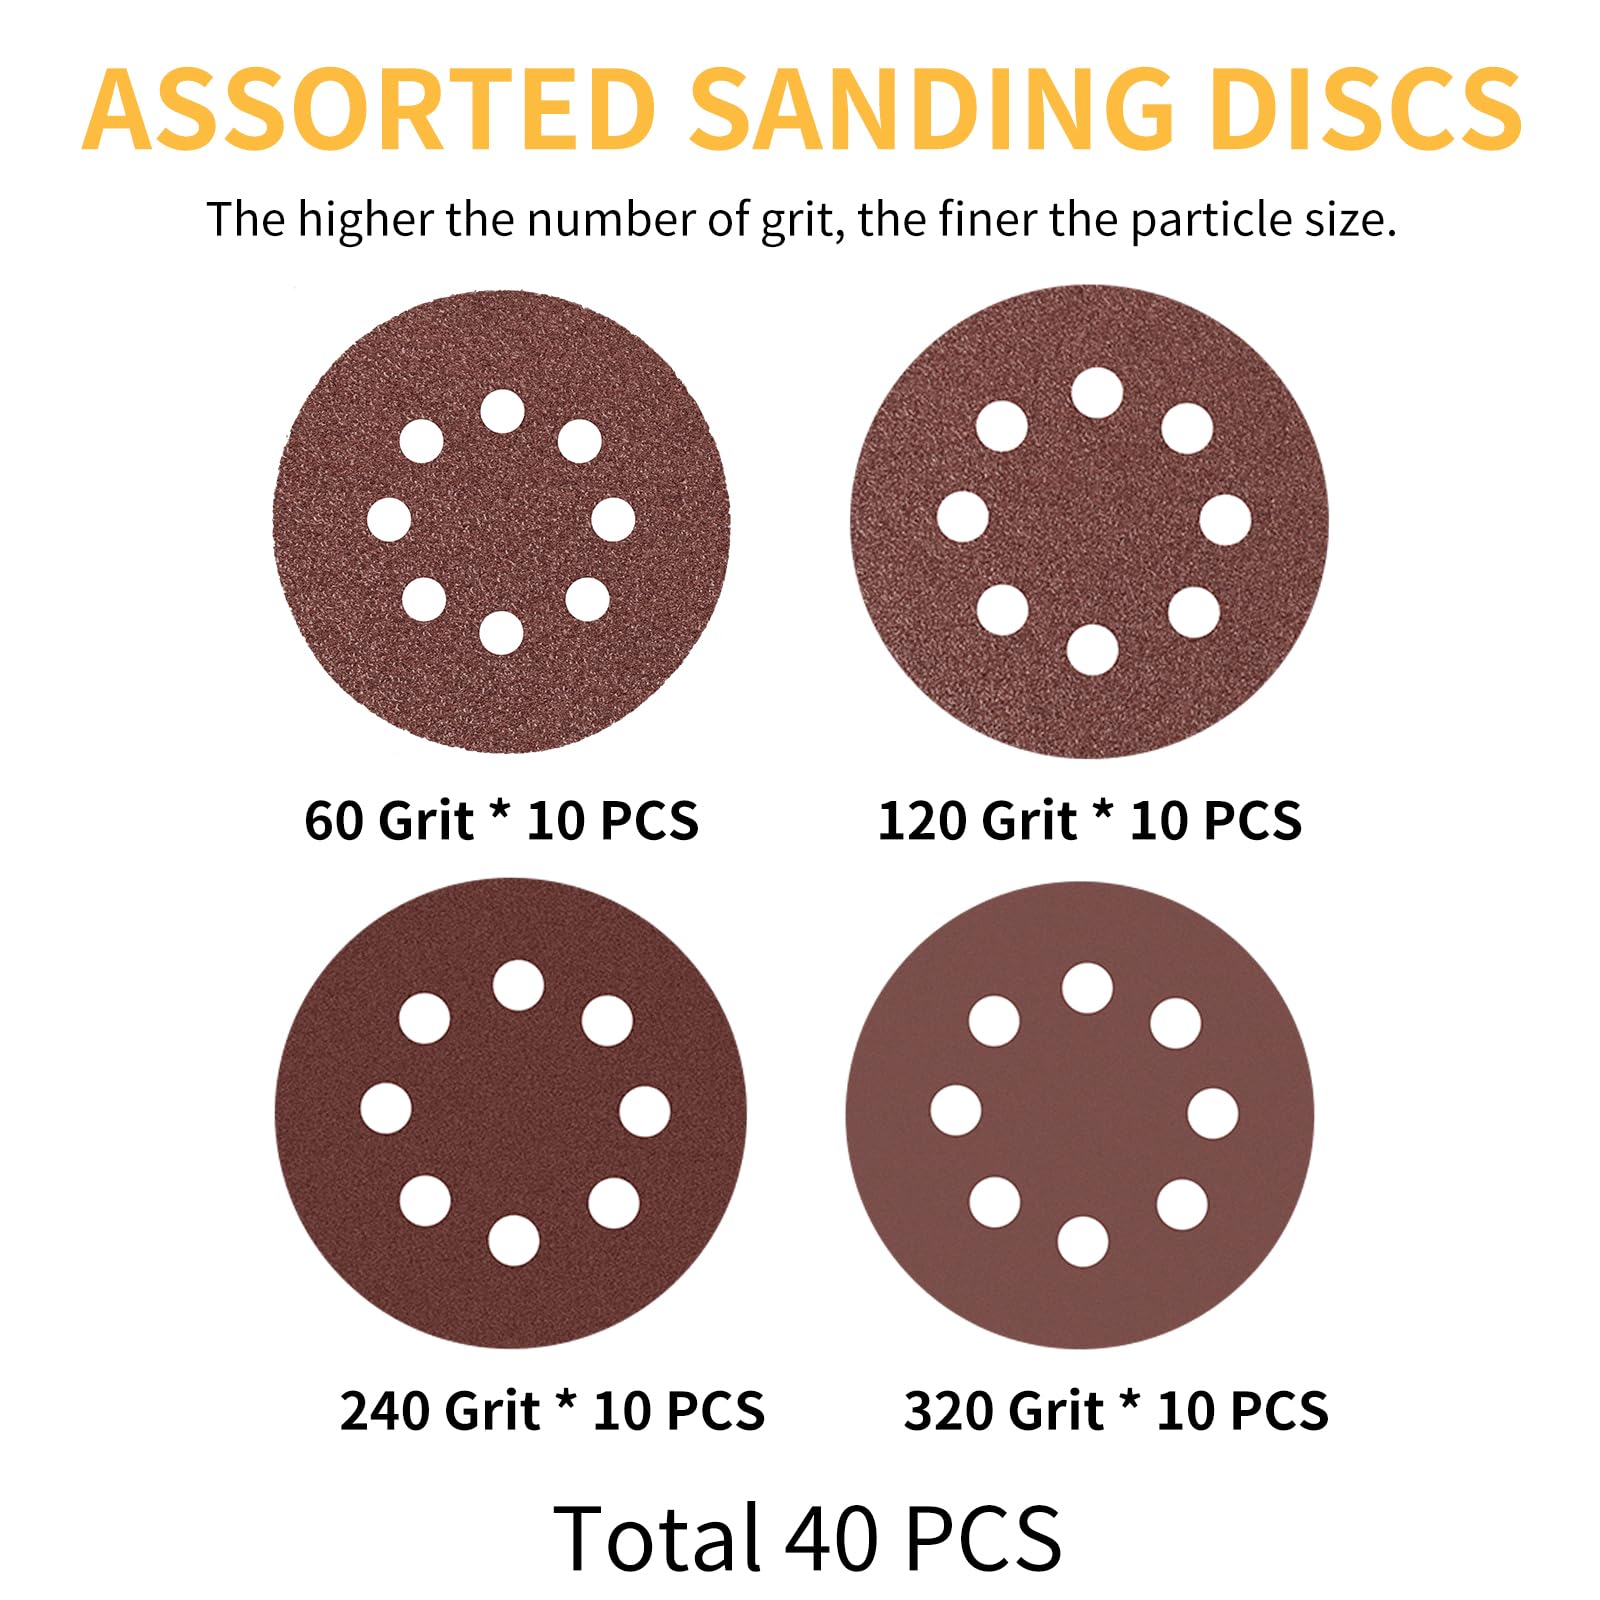 KAFUWELL 5 Inch Sanding Discs Hook and Loop, 8 Hole Random Disc Sanders & Orbital Sander Sandpaper for Wood with Variety Pack, 60, 120, 240, 320 Grit - 40 PCS Dustless Round Sanding Discs